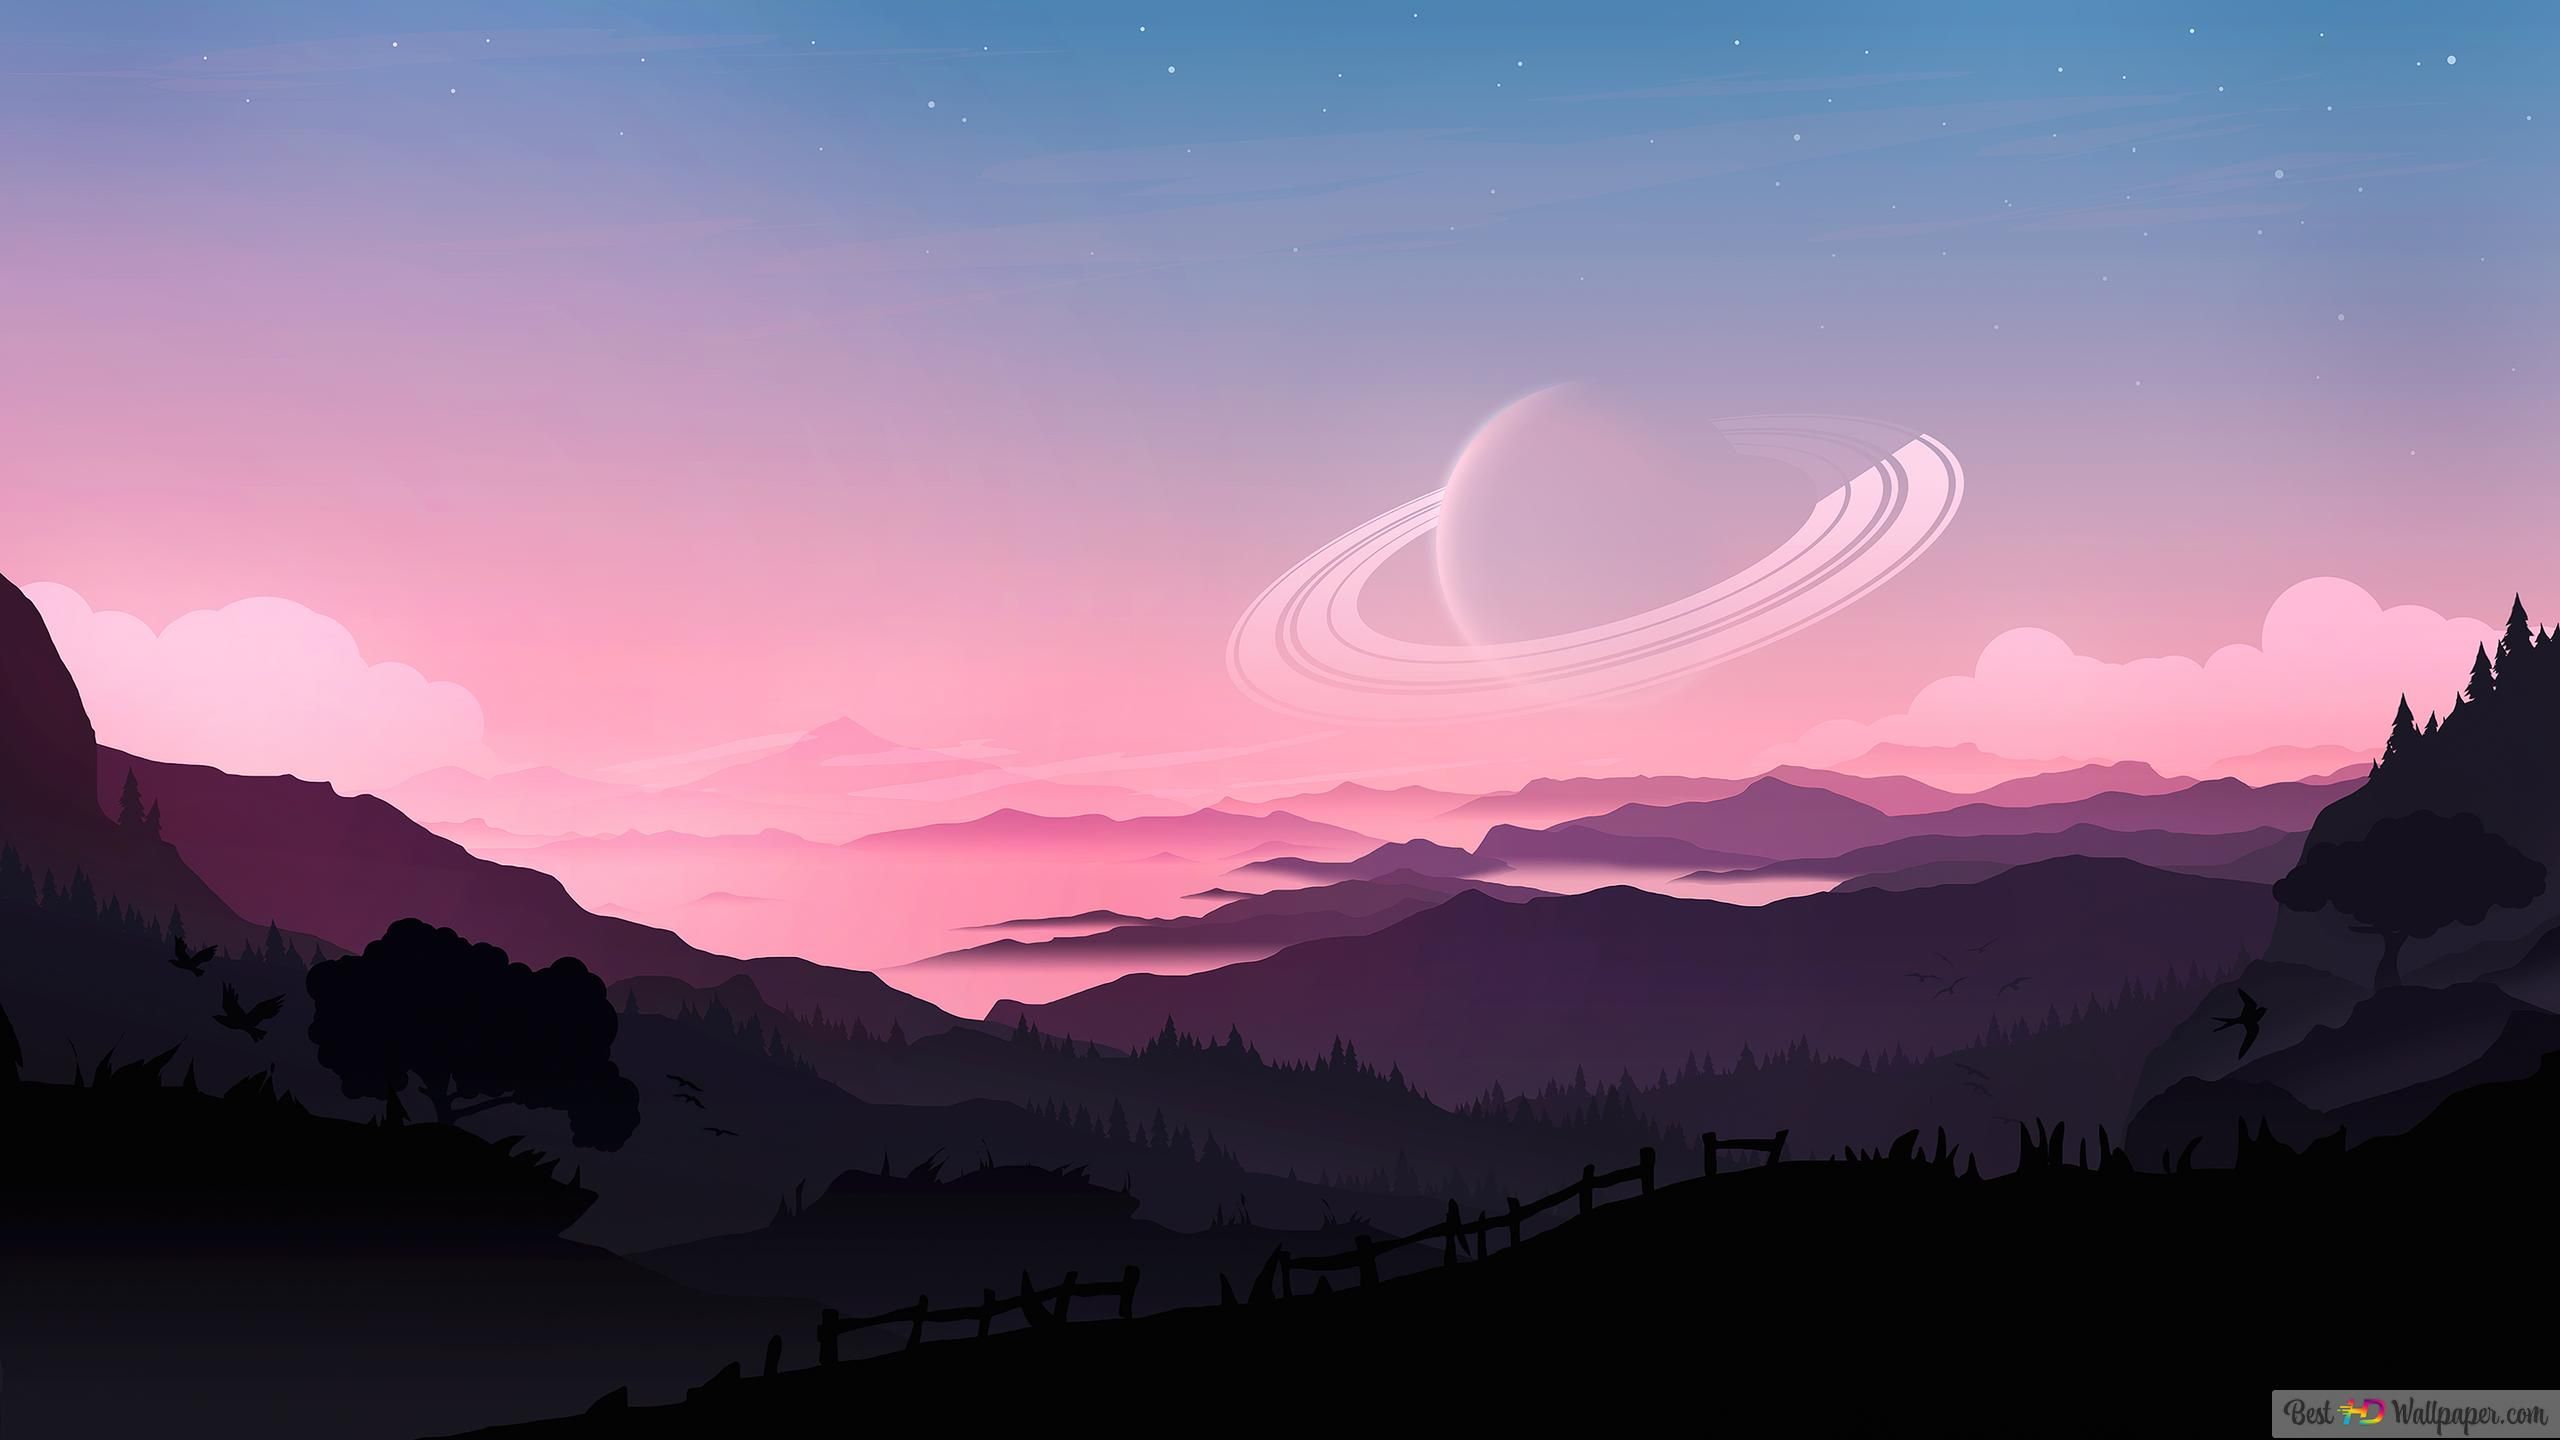 Mountain Sky Planet Art 4K wallpaper download